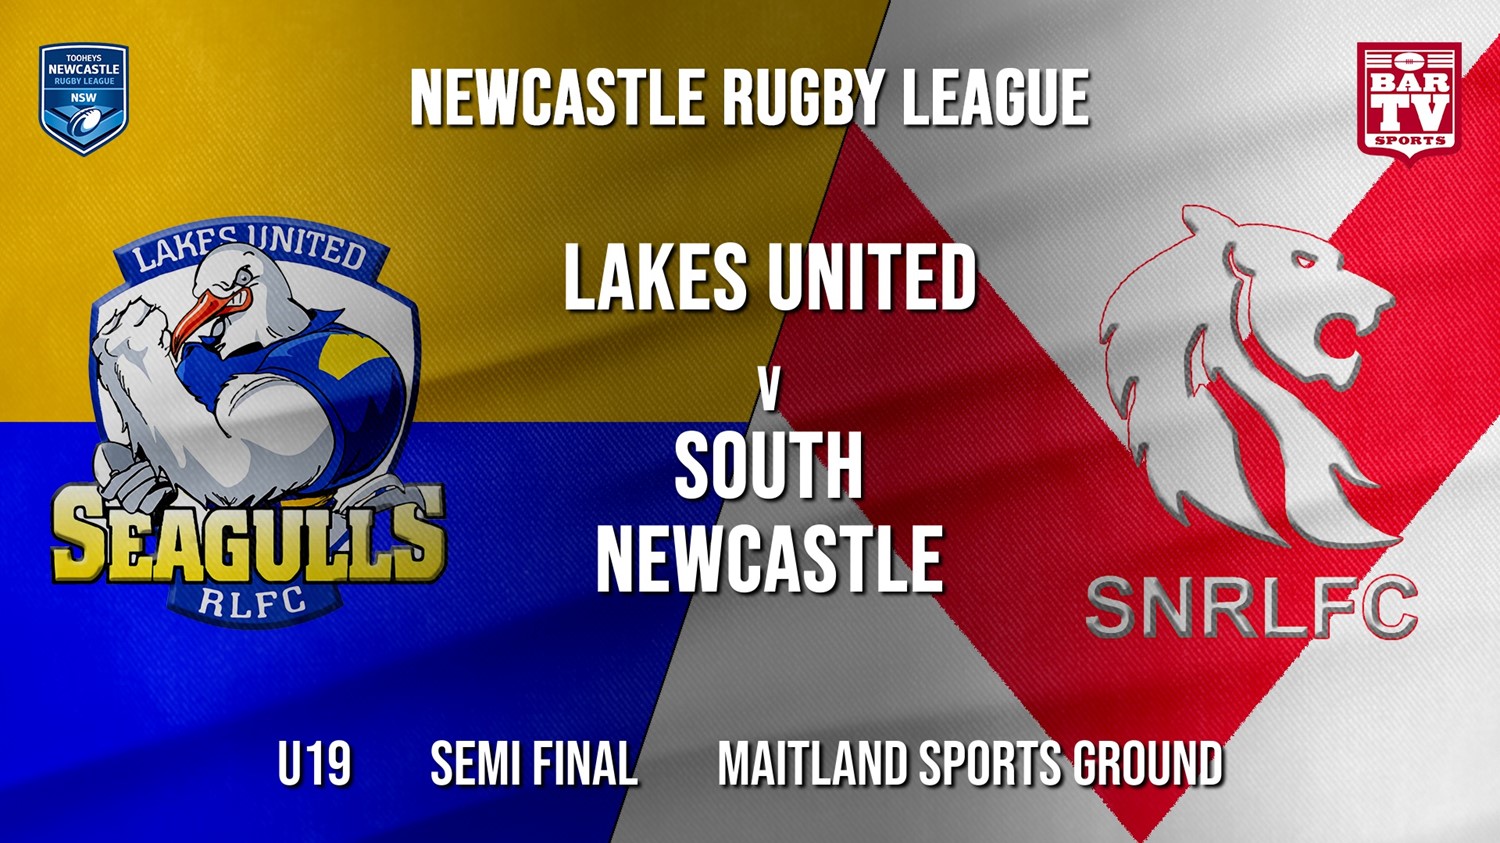 Newcastle Rugby League Semi Final - U19 - Lakes United v South Newcastle Slate Image